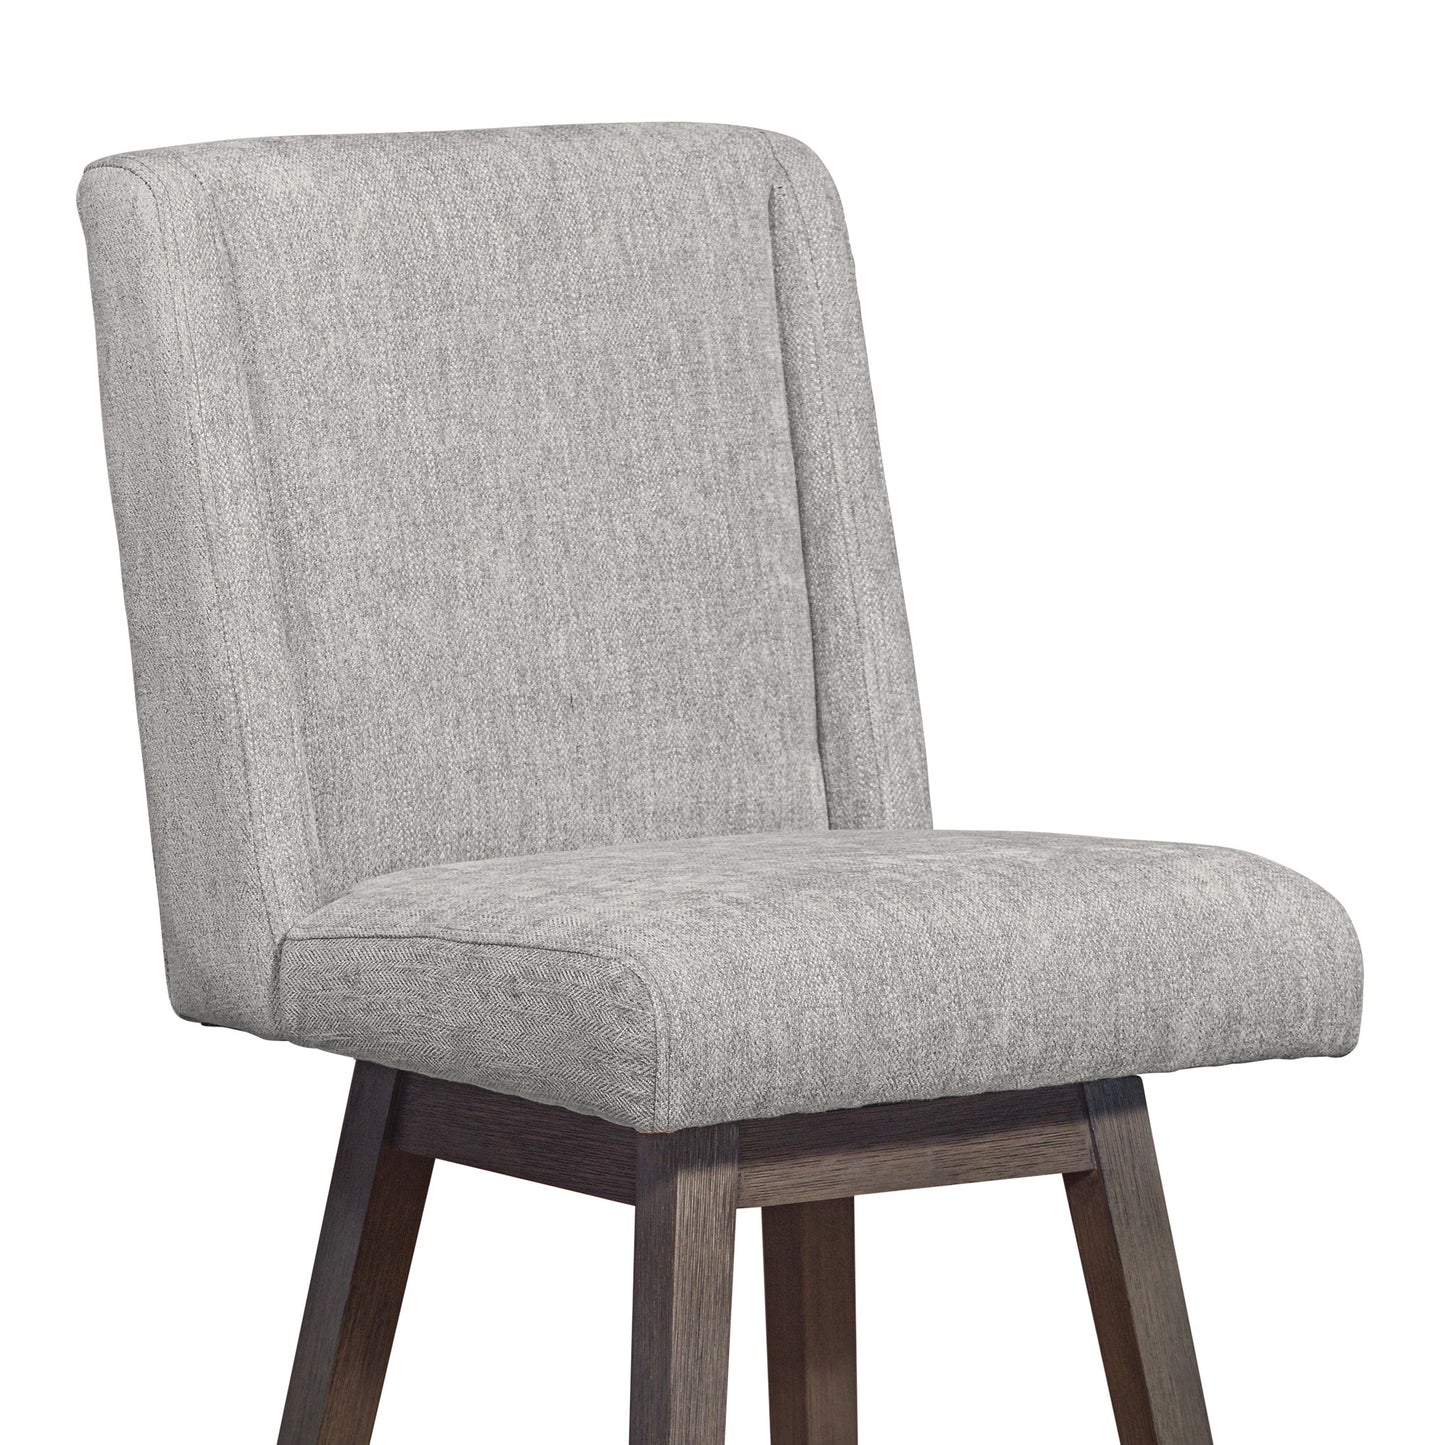 30" Mocha And Gray Solid Wood Swivel Bar Chair